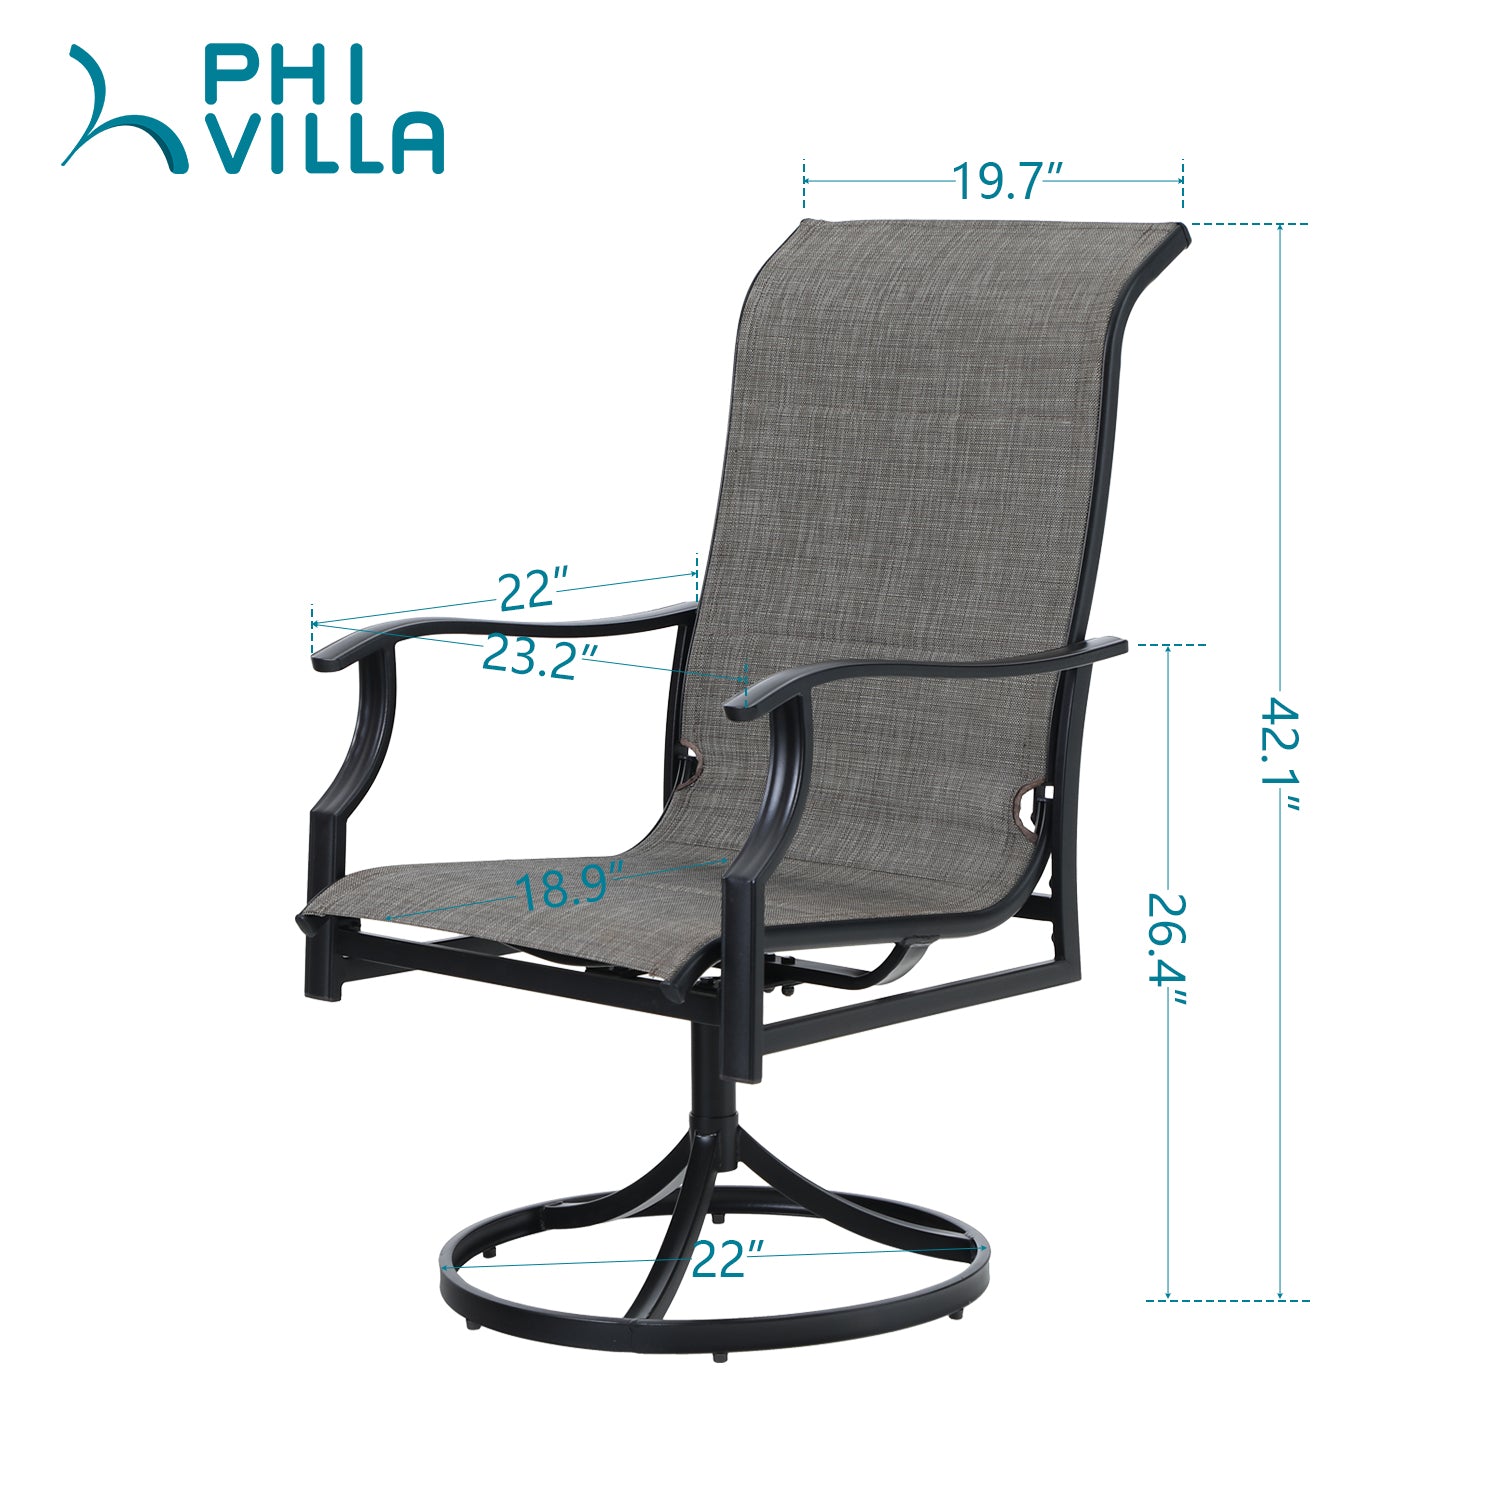 PHI VILLA 6/8-Pcs Patio Padded Swivel Rocker Texitilene Chair with Wave Armrests